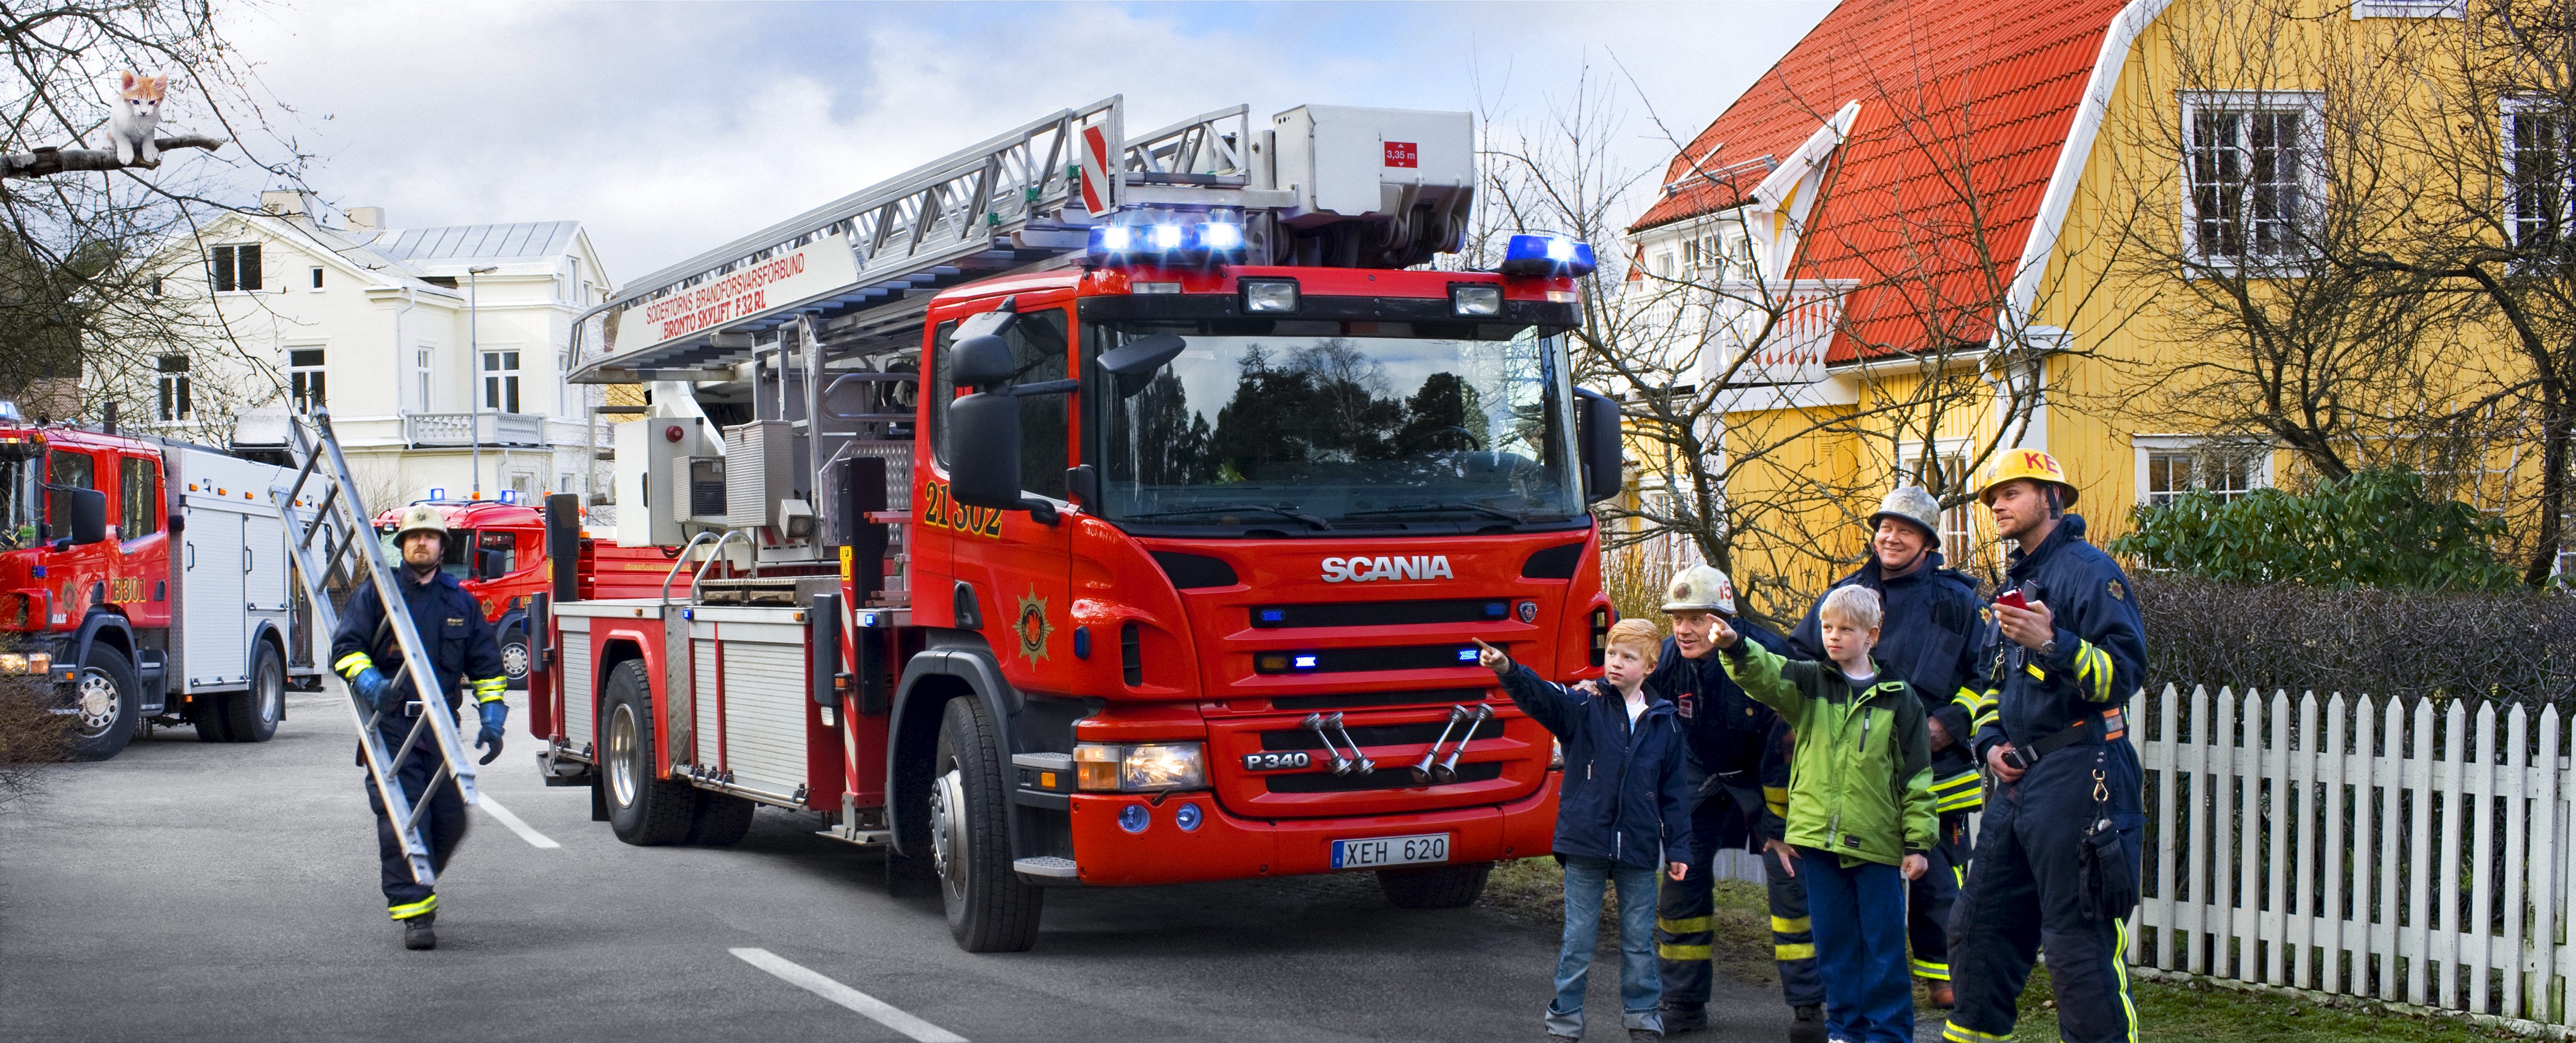 Scania Vehicle Truck Fire Truck Fire Engine Firefighter 4644x1881